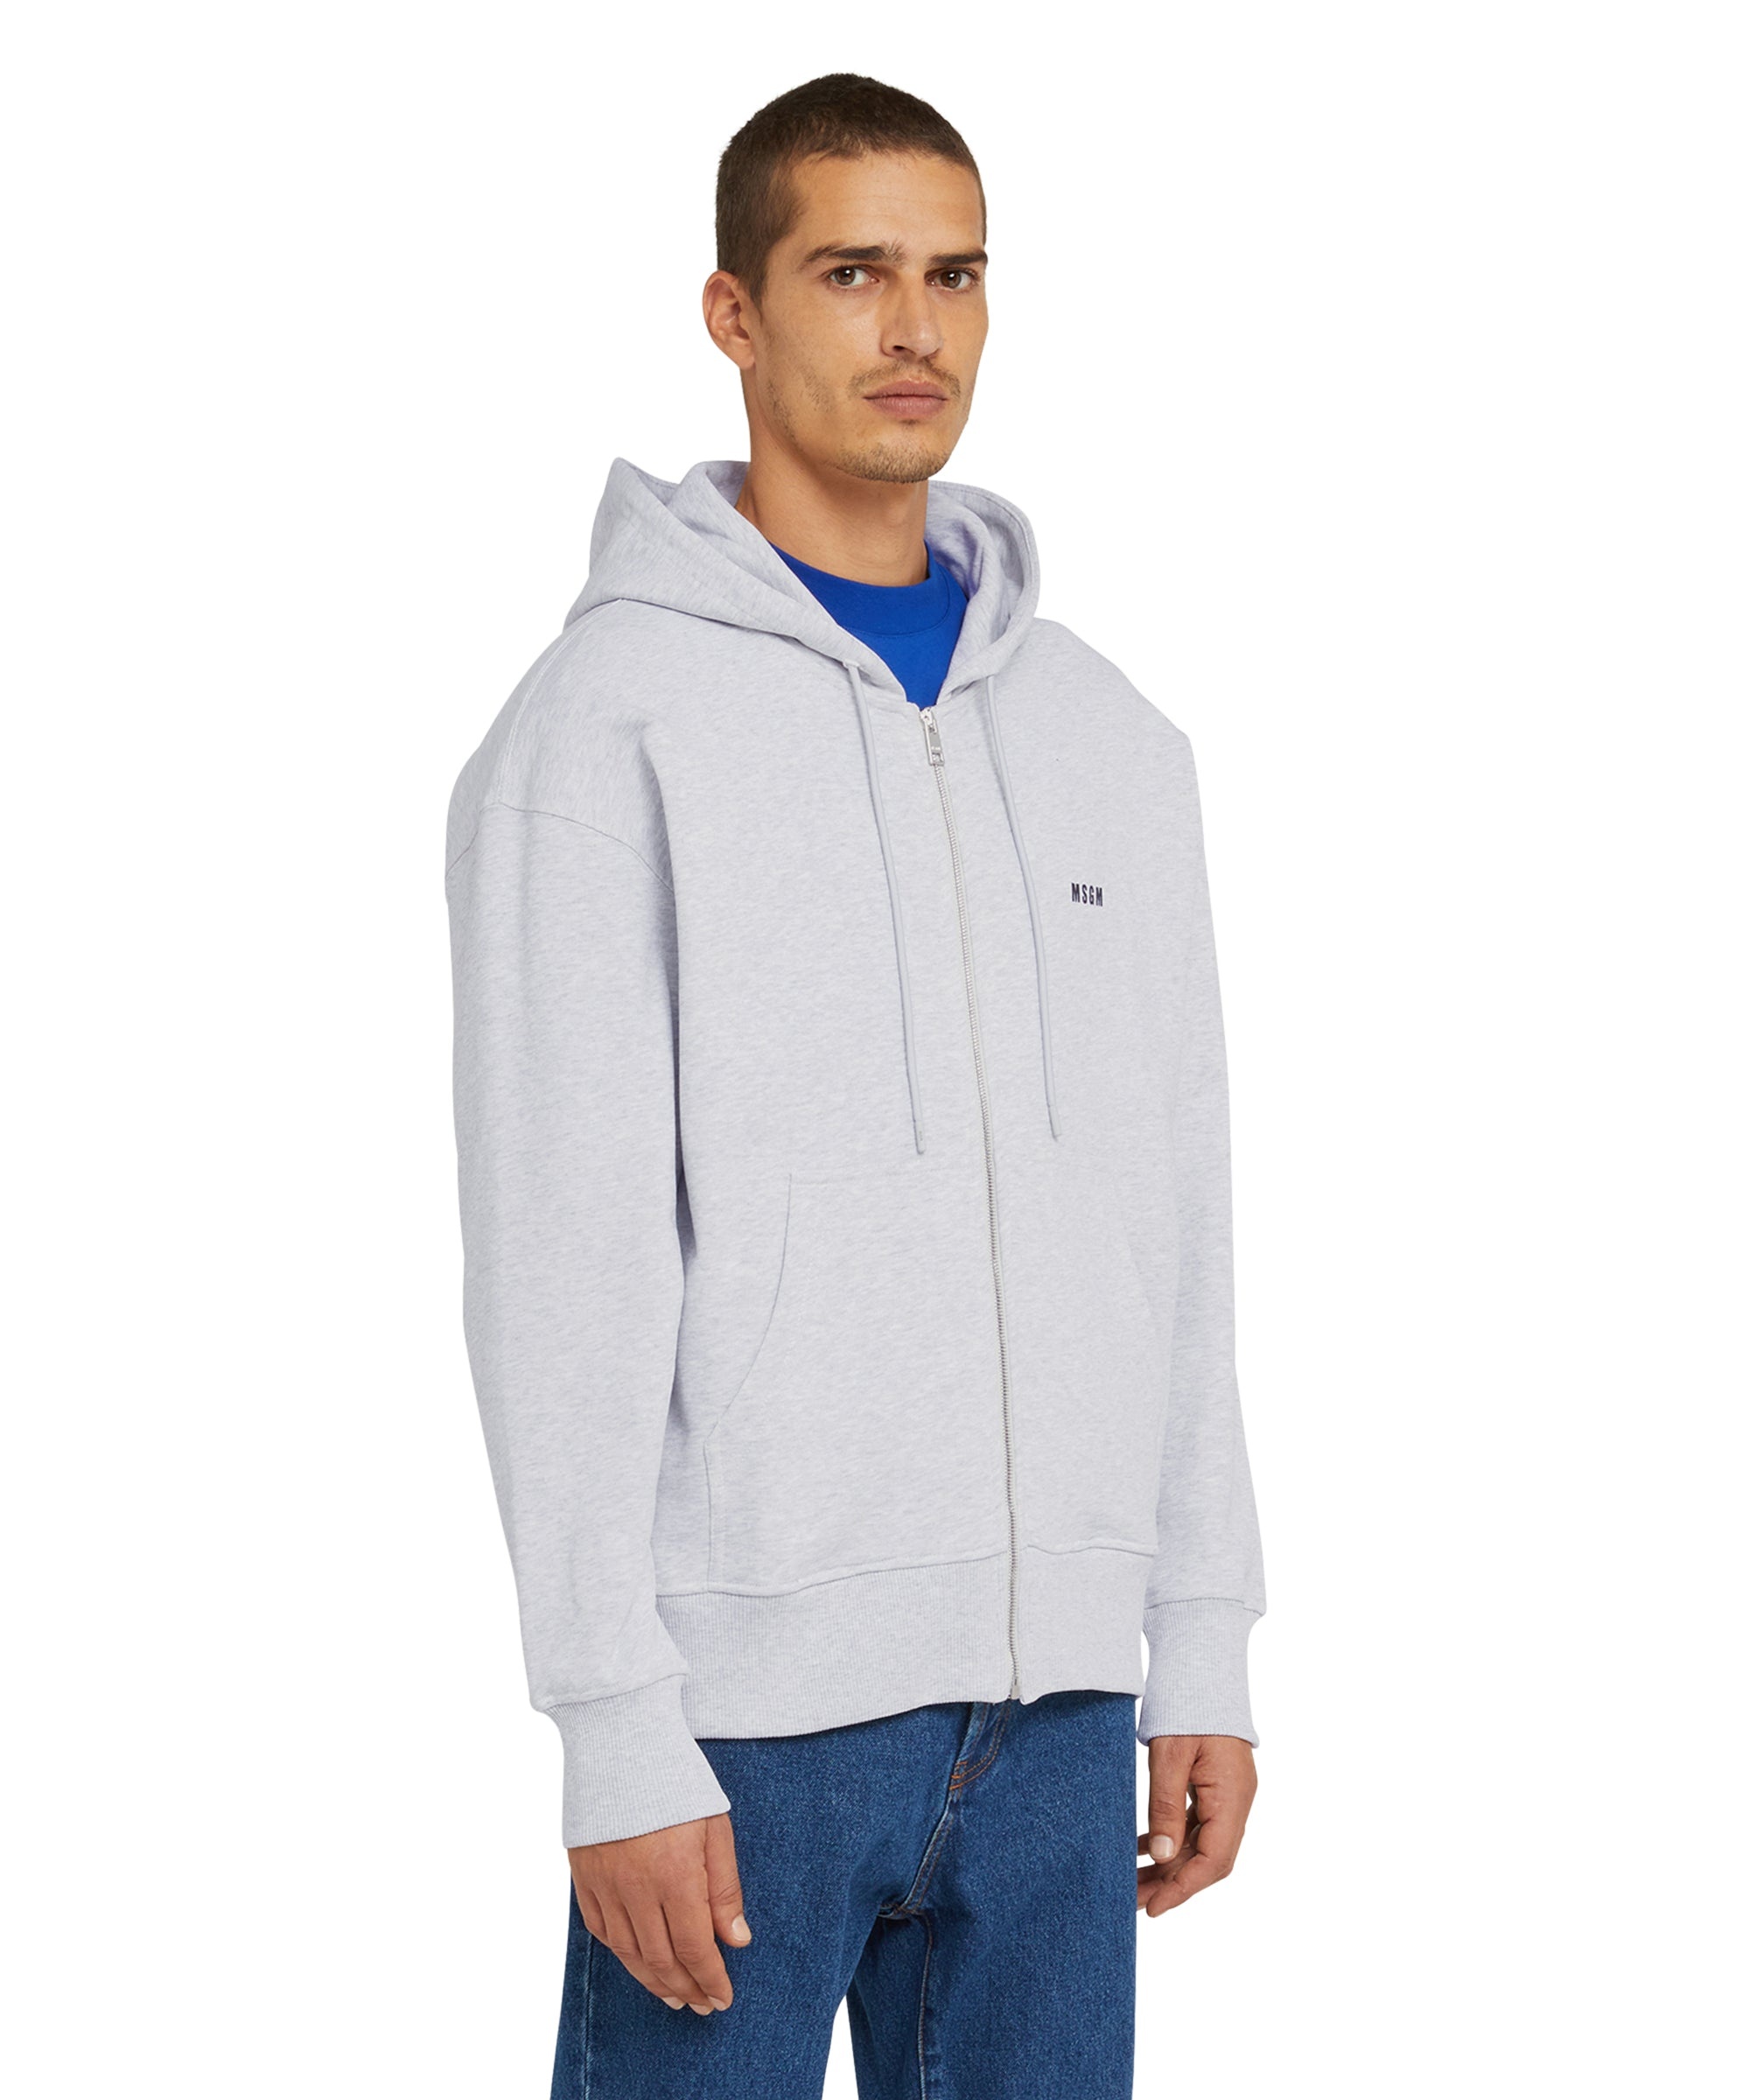 Cotton sweatshirt with hood and micro logo - 4